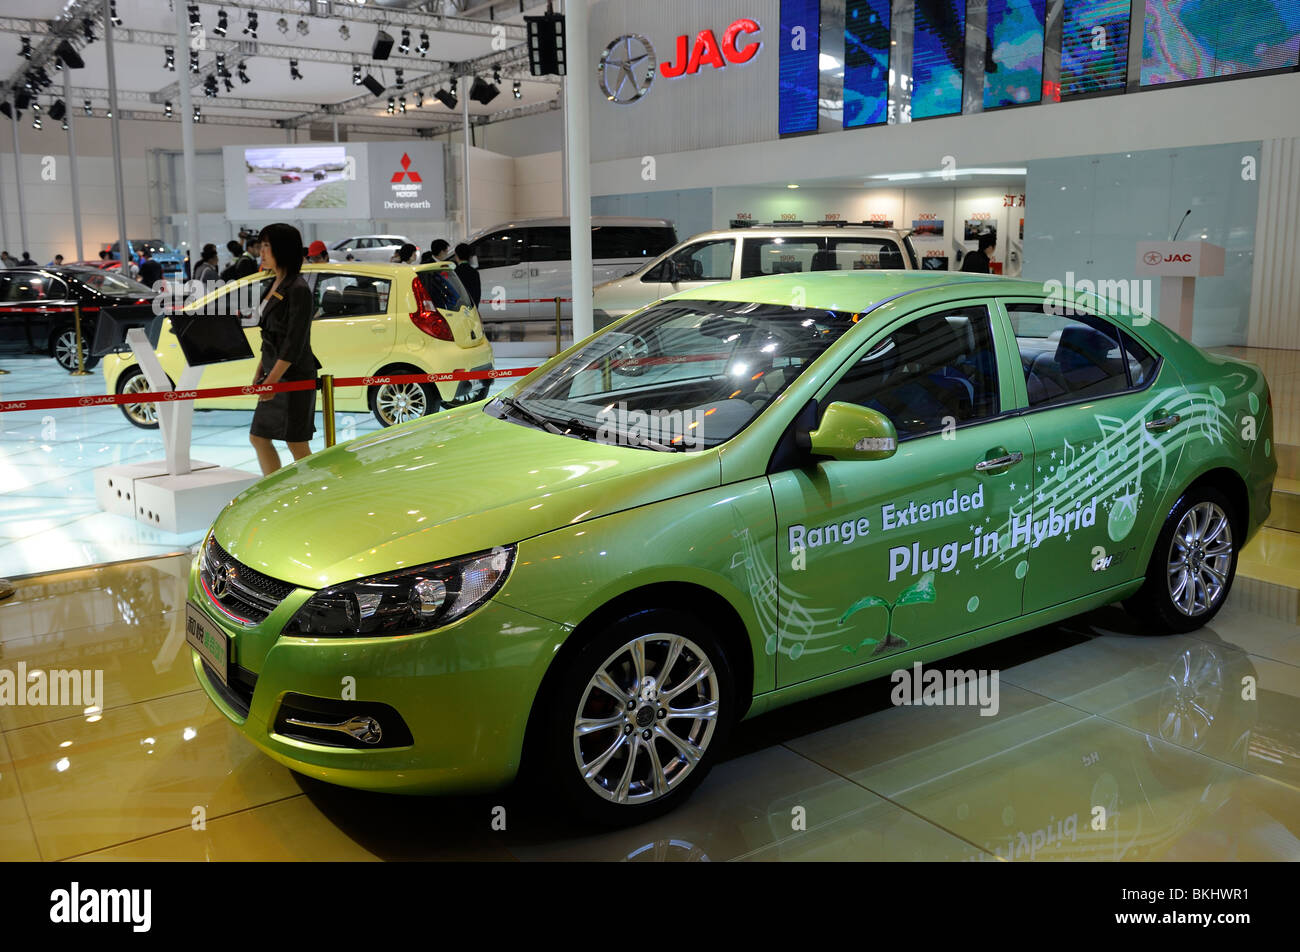 JAC Hybrid car at Beijing Auto Show 2010. Stock Photo